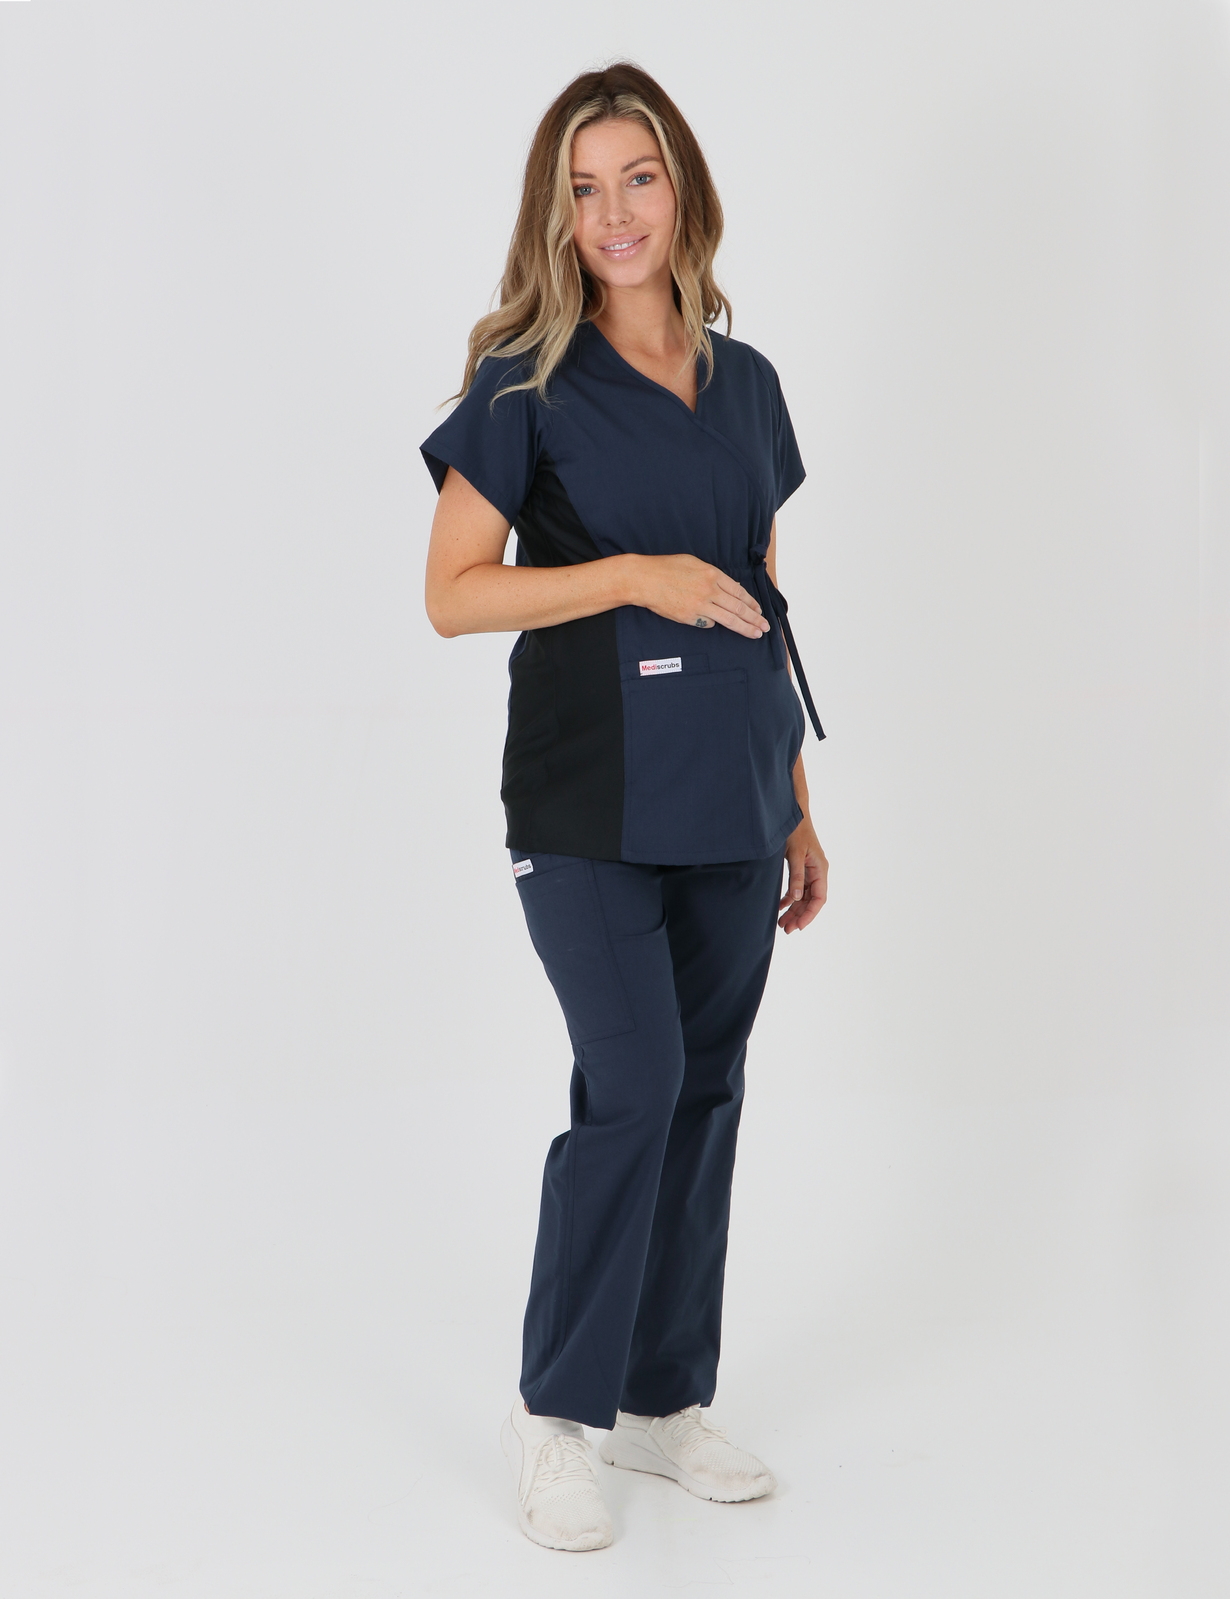 Rockhampton Hospital Registered Nurse Uniform Top Only Bundle (Maternity Spandex Top in Navy incl Logos)